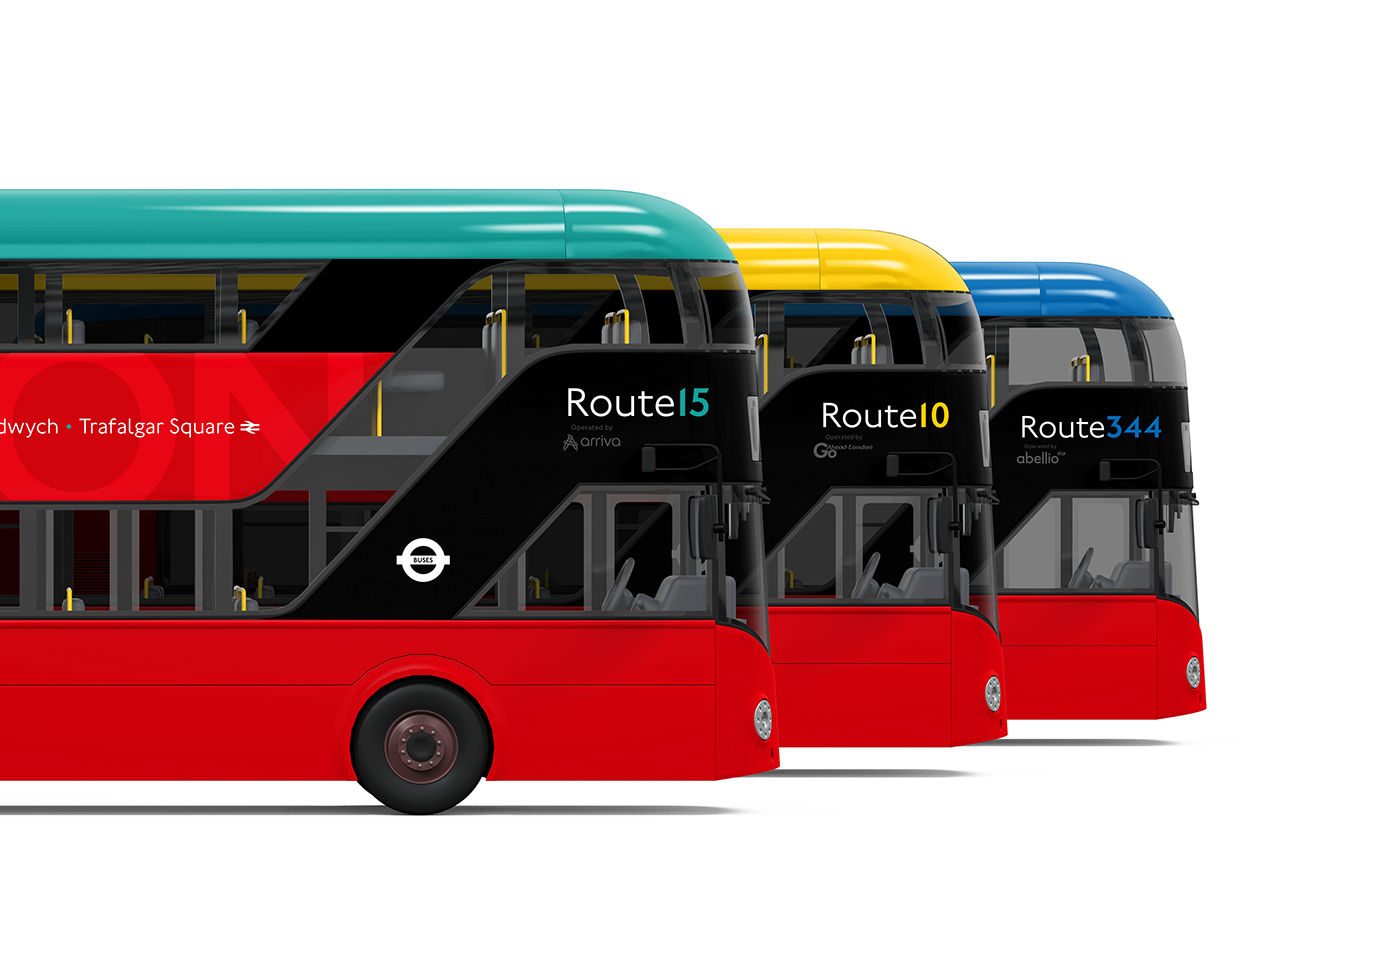 London bus buses tfl brand Livery Vehicle metro